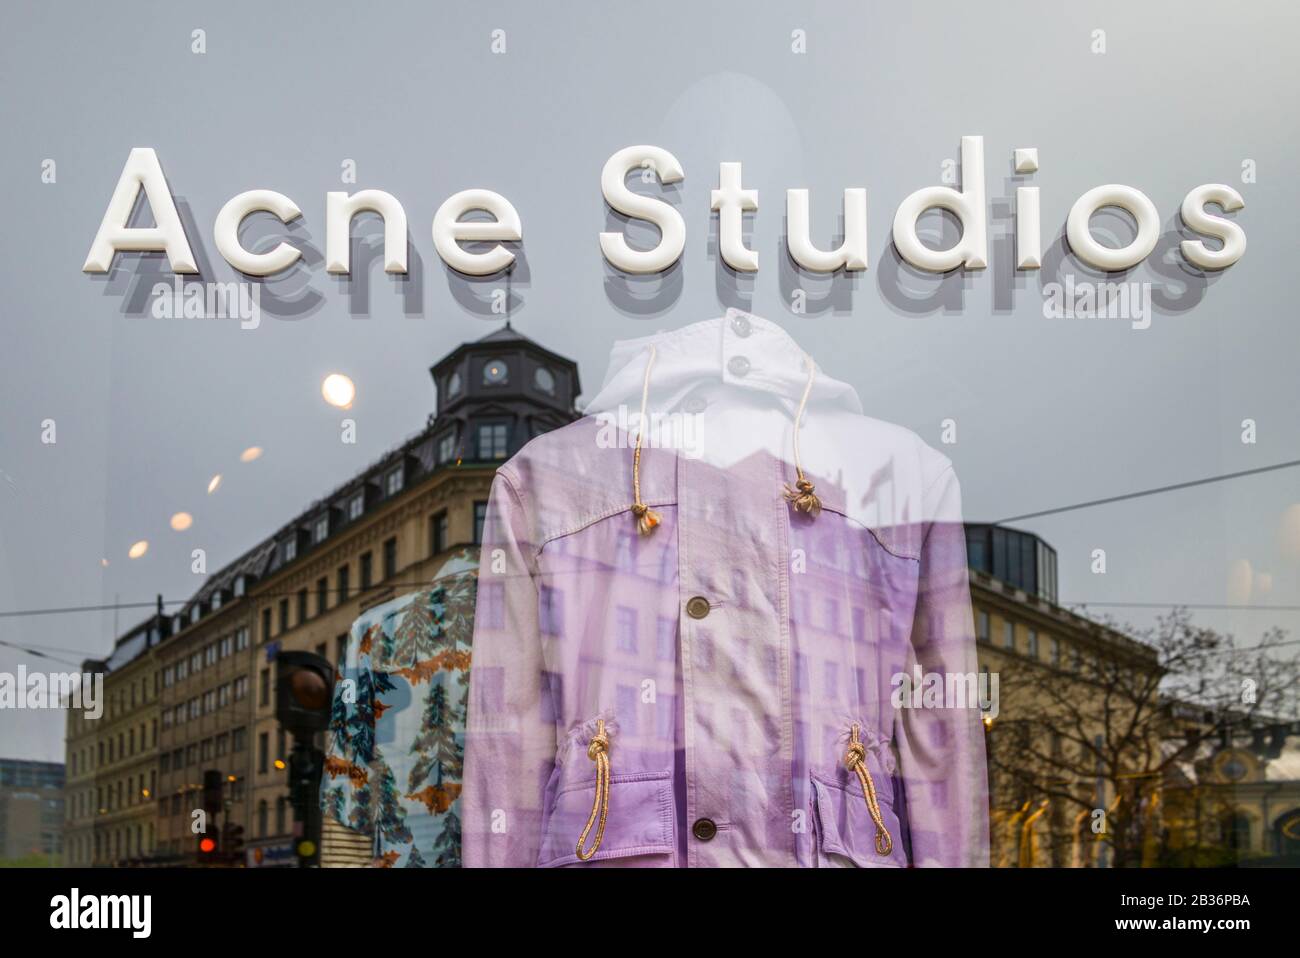 acne studios swedish fashion